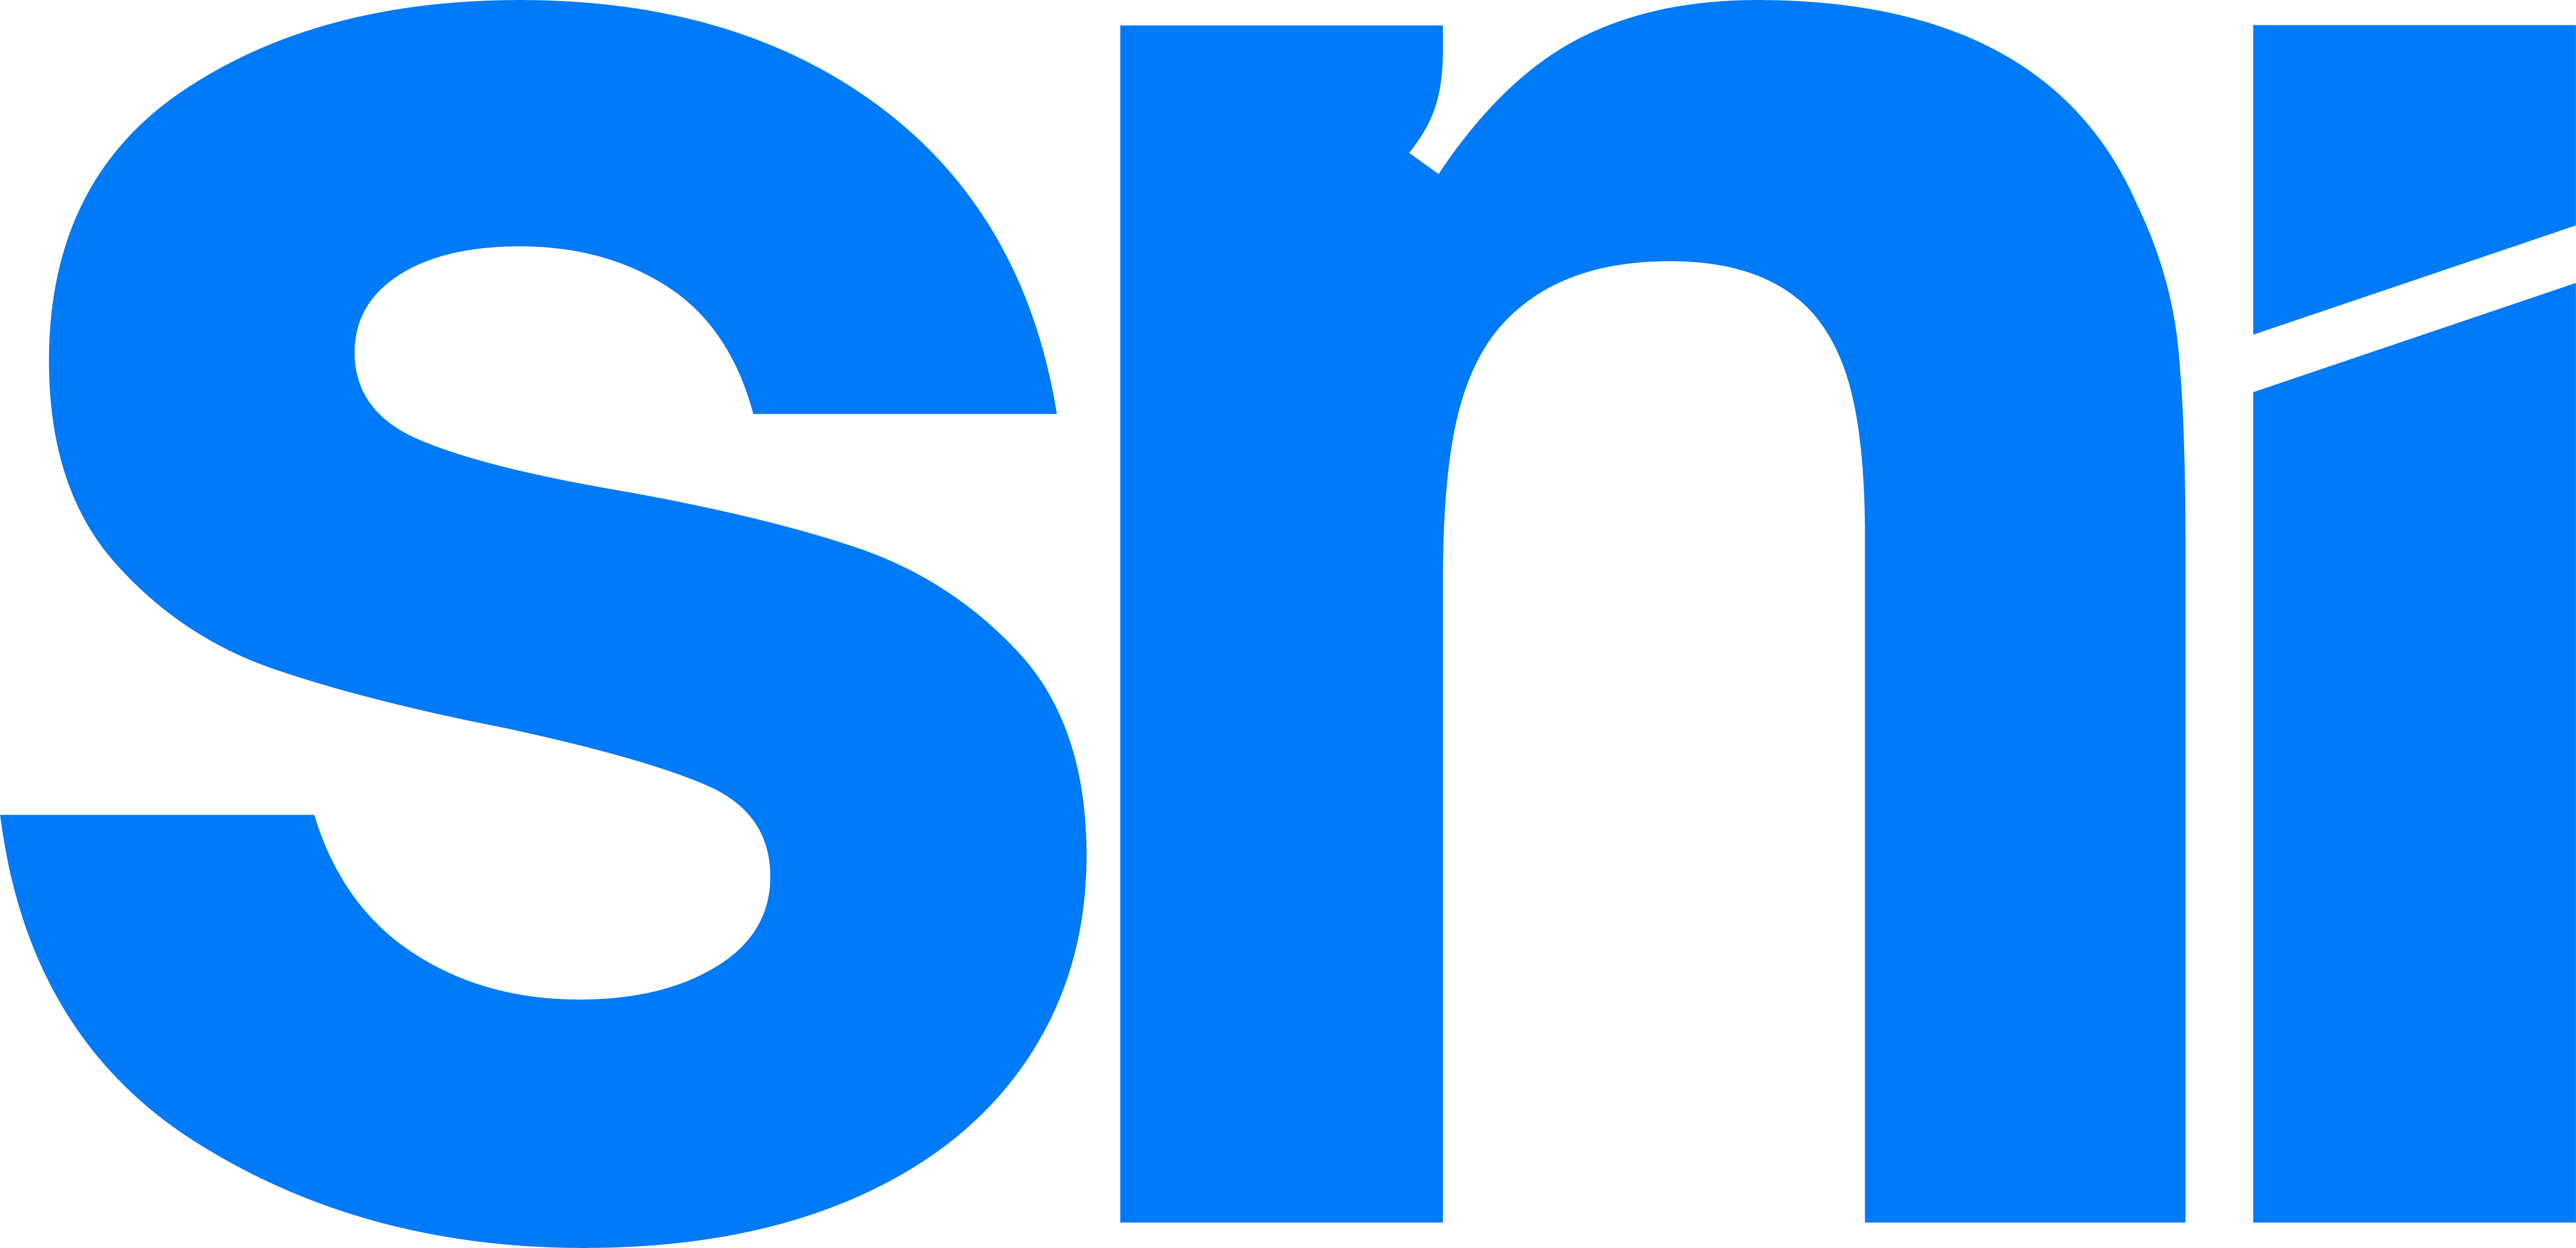 SNI Technology